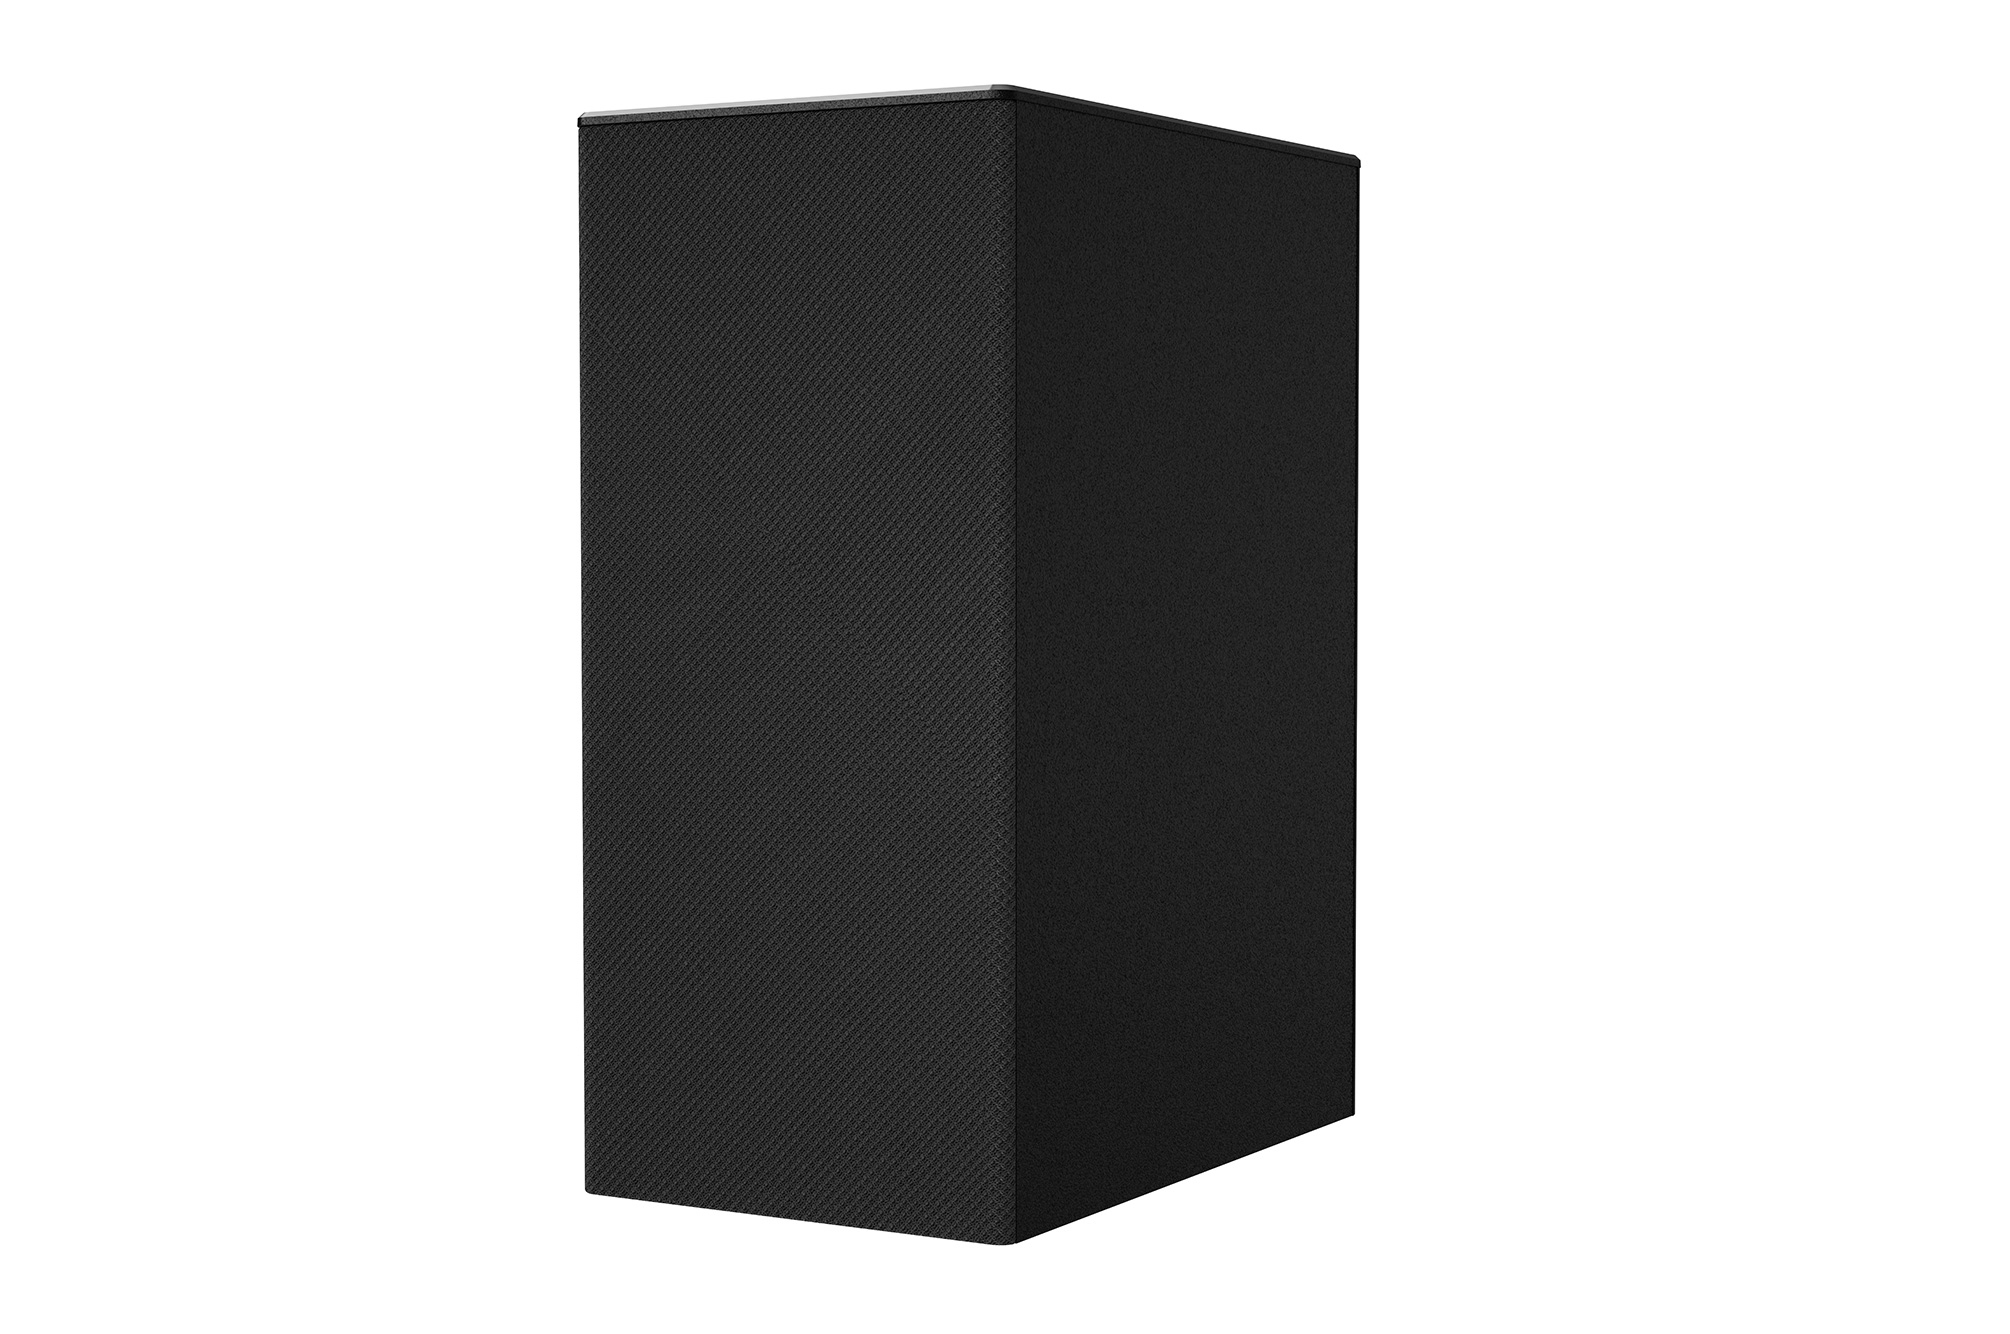 LG SN5.DEUSLLK altoparlante soundbar Nero 2.1 canali 400 W [SN5.DEUSLLK]